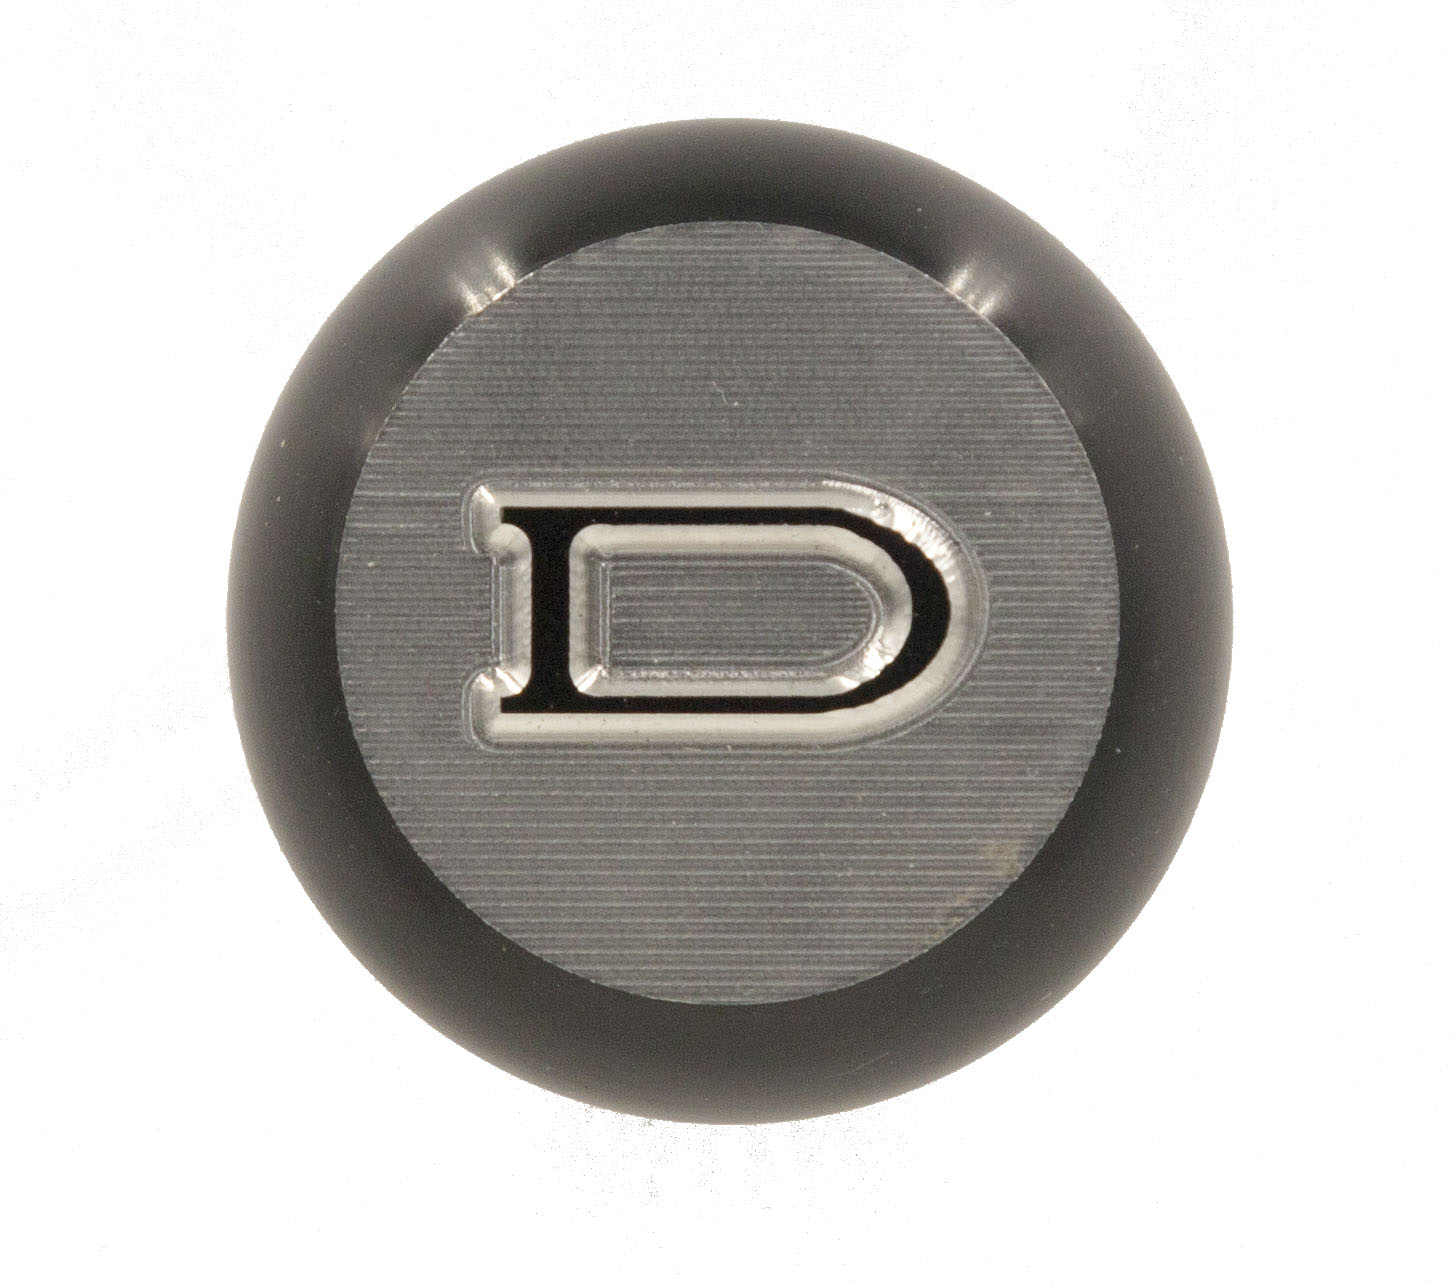 Billet Datsun "D" Shift Knob